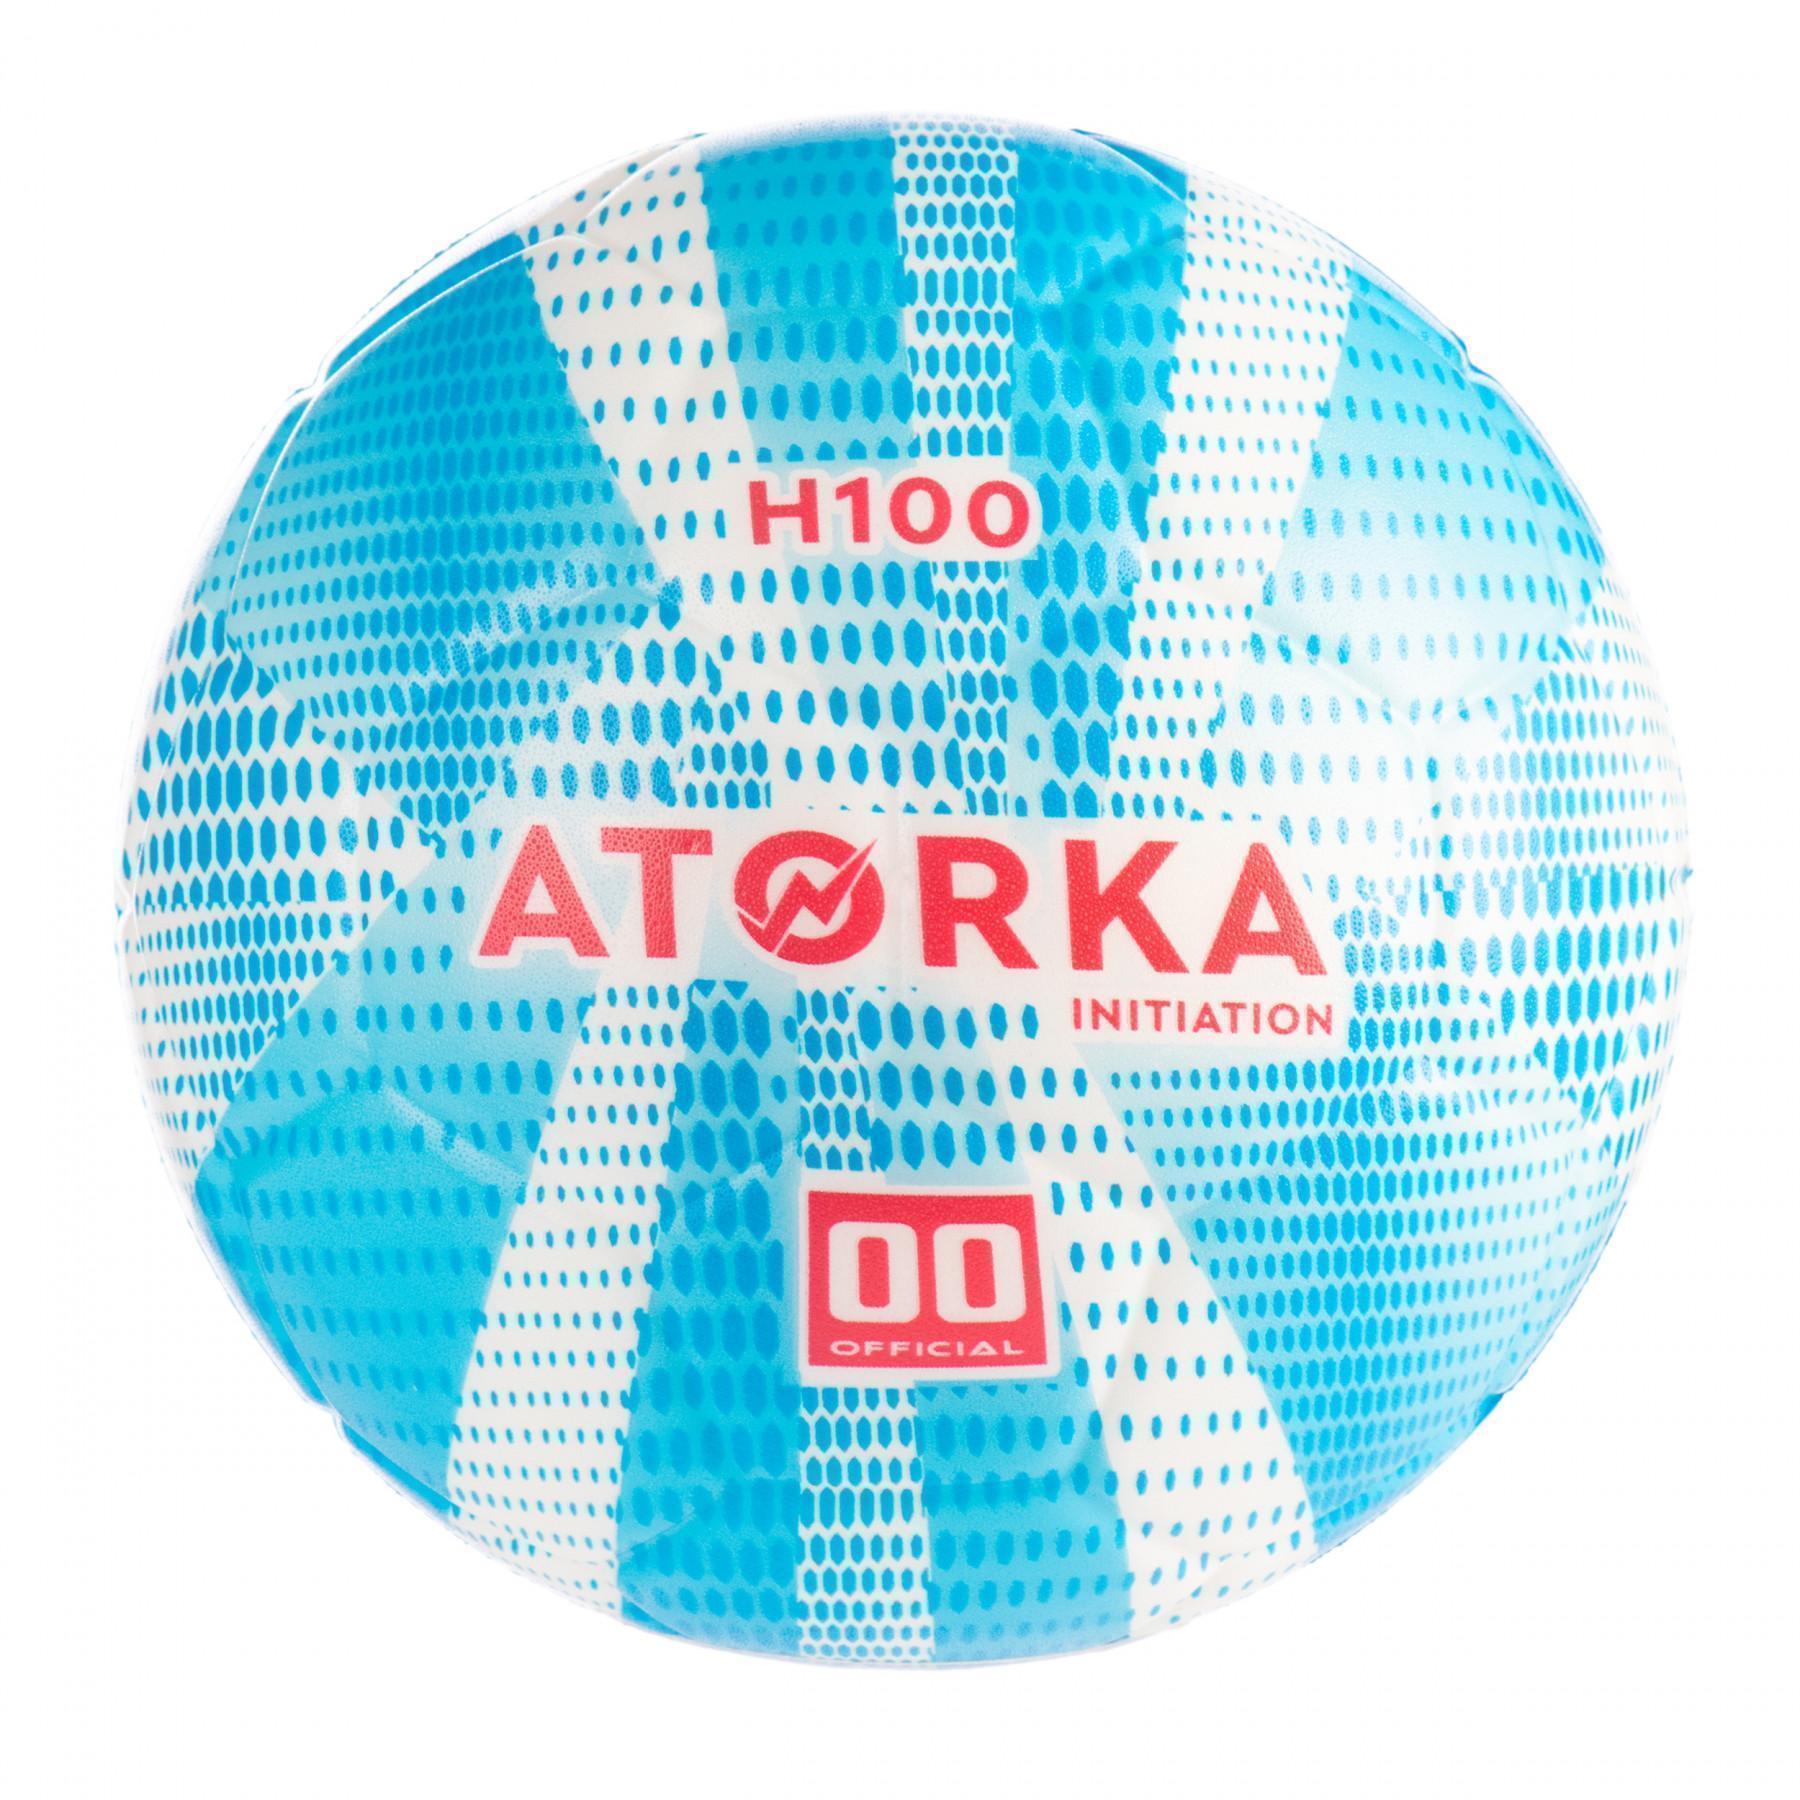 Bola para niños Atorka H100 INITIATION